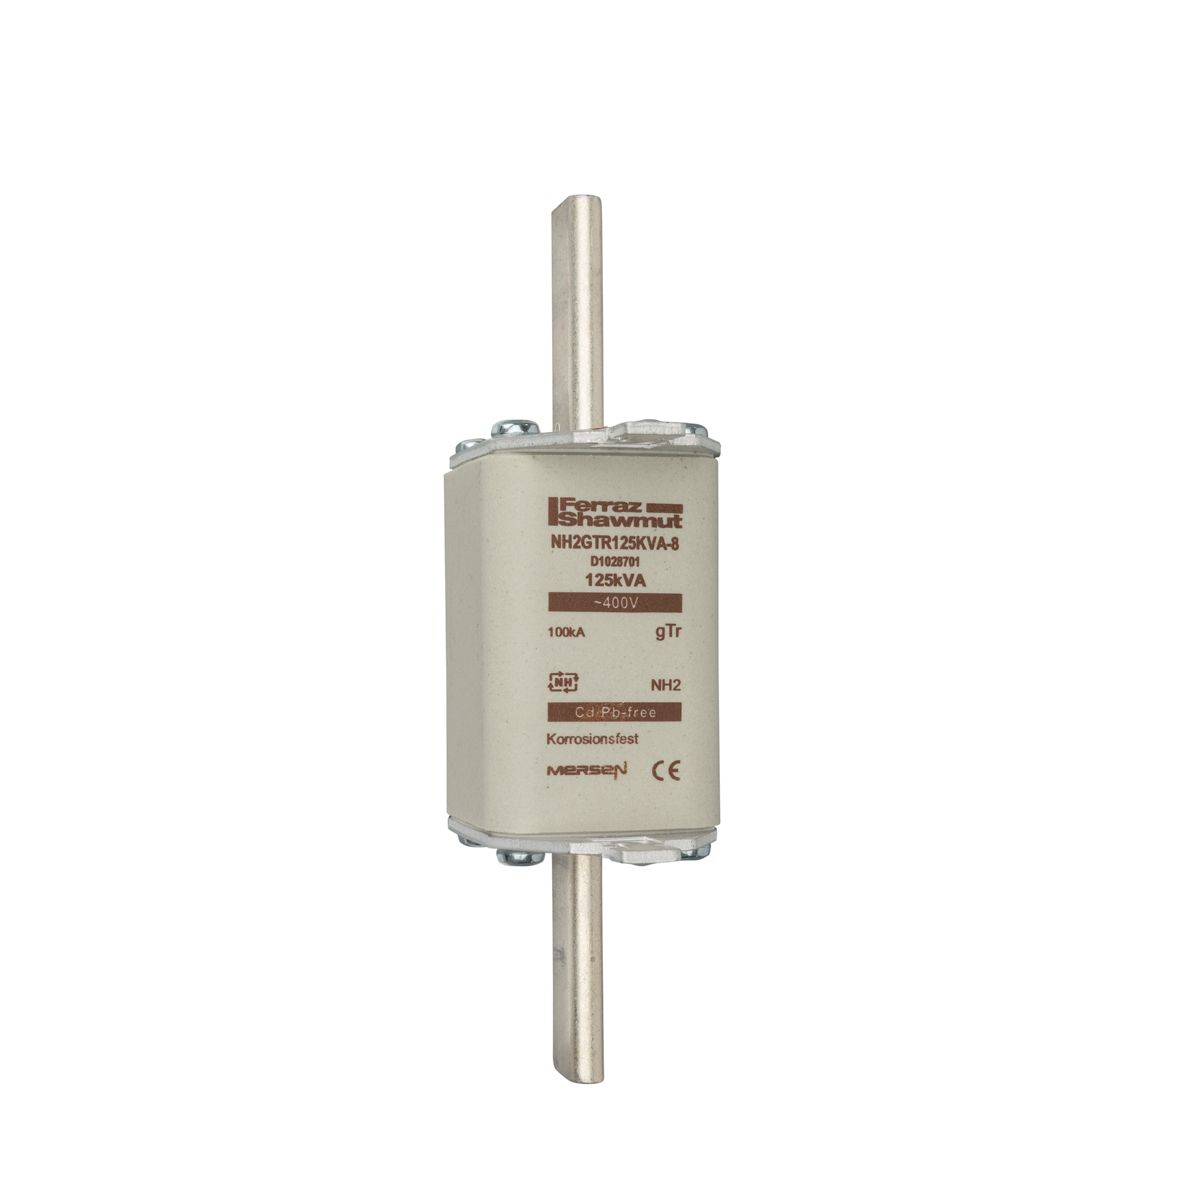 D1028701 - NH fuse-link gTr, 400VAC, size 2, 125KVA, top indicator/live tags